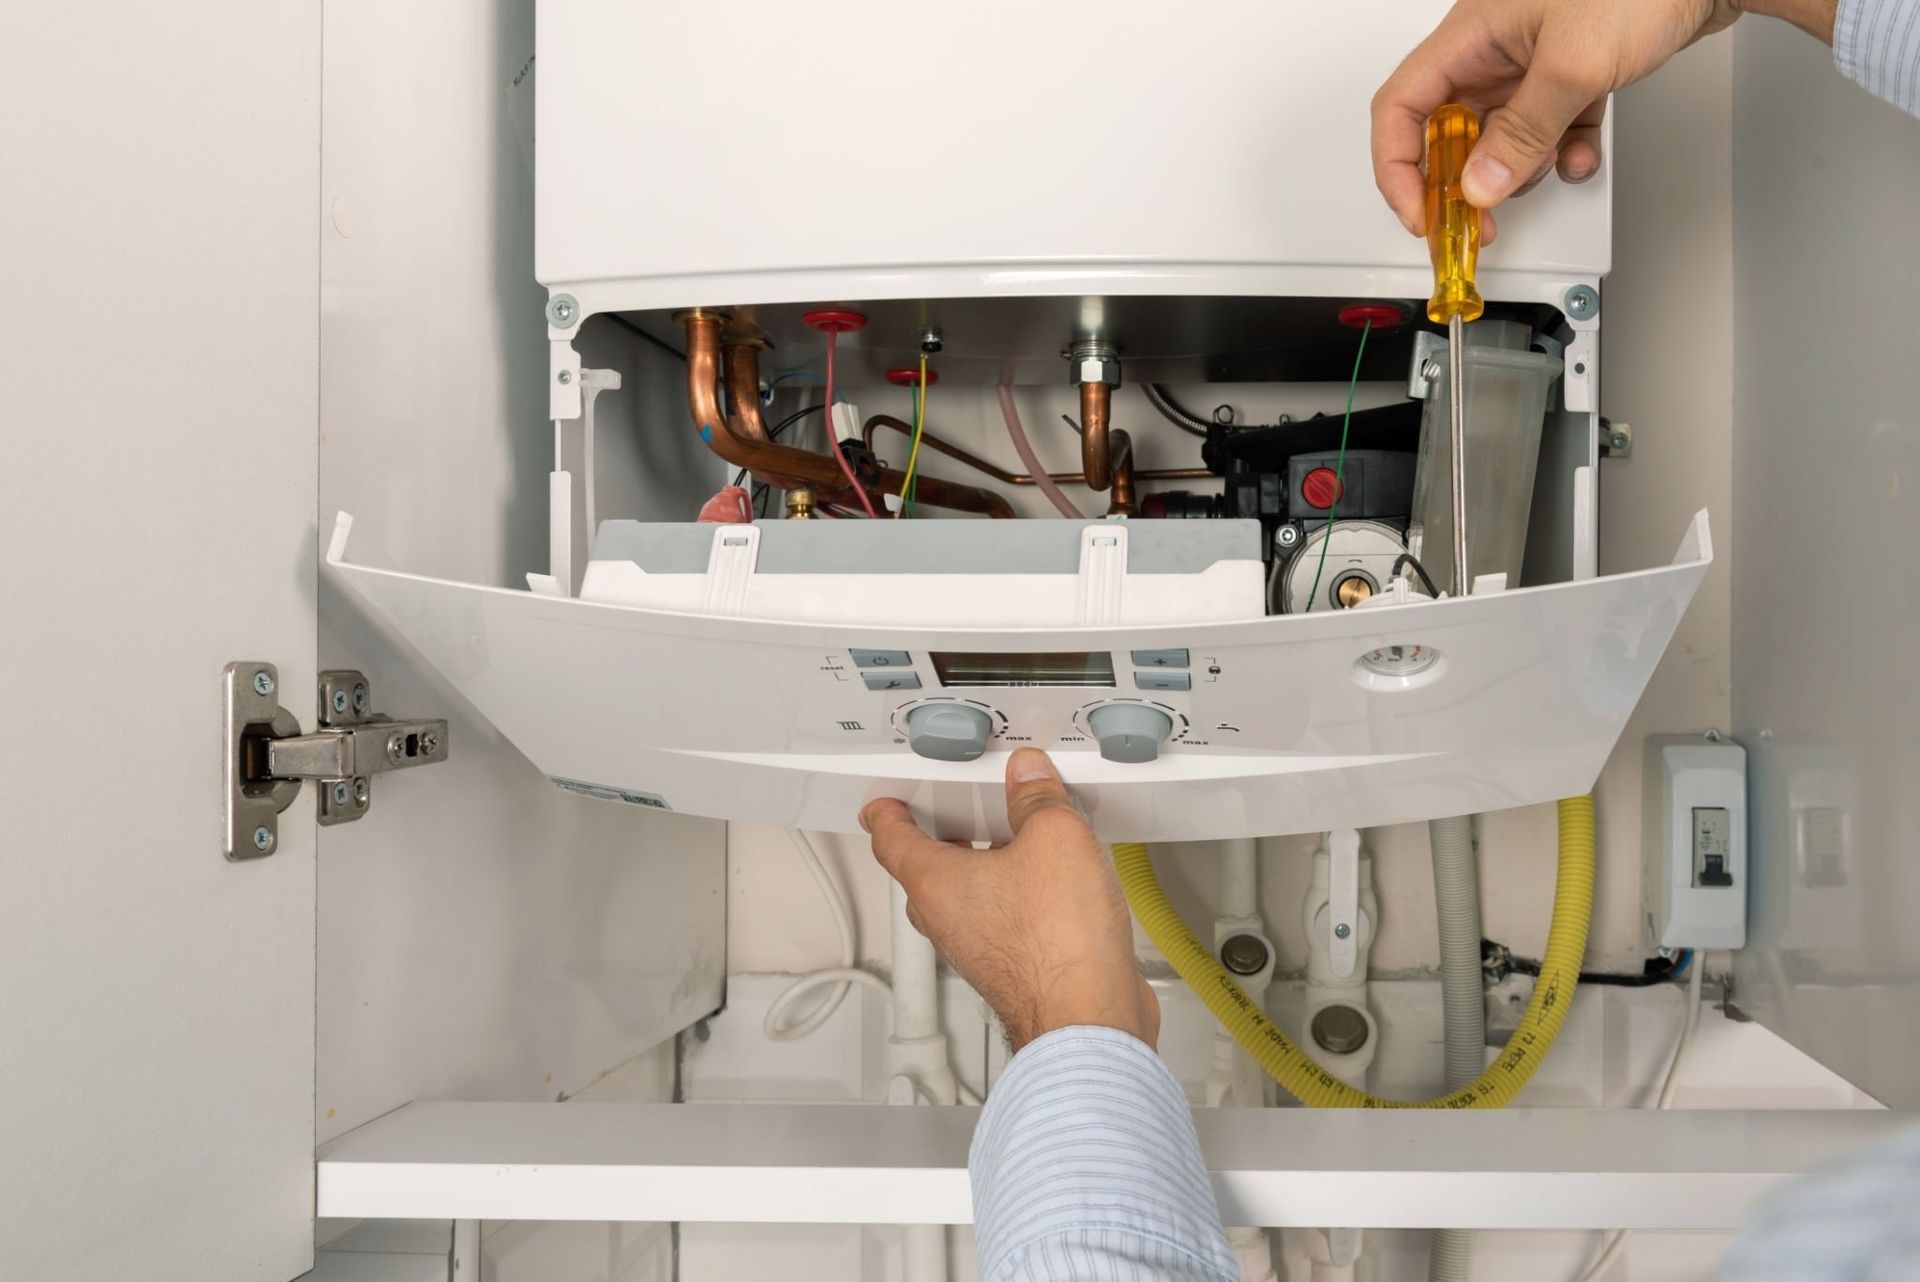 Tier One Plumbing solutions offers Water Heater Repair servicing TN